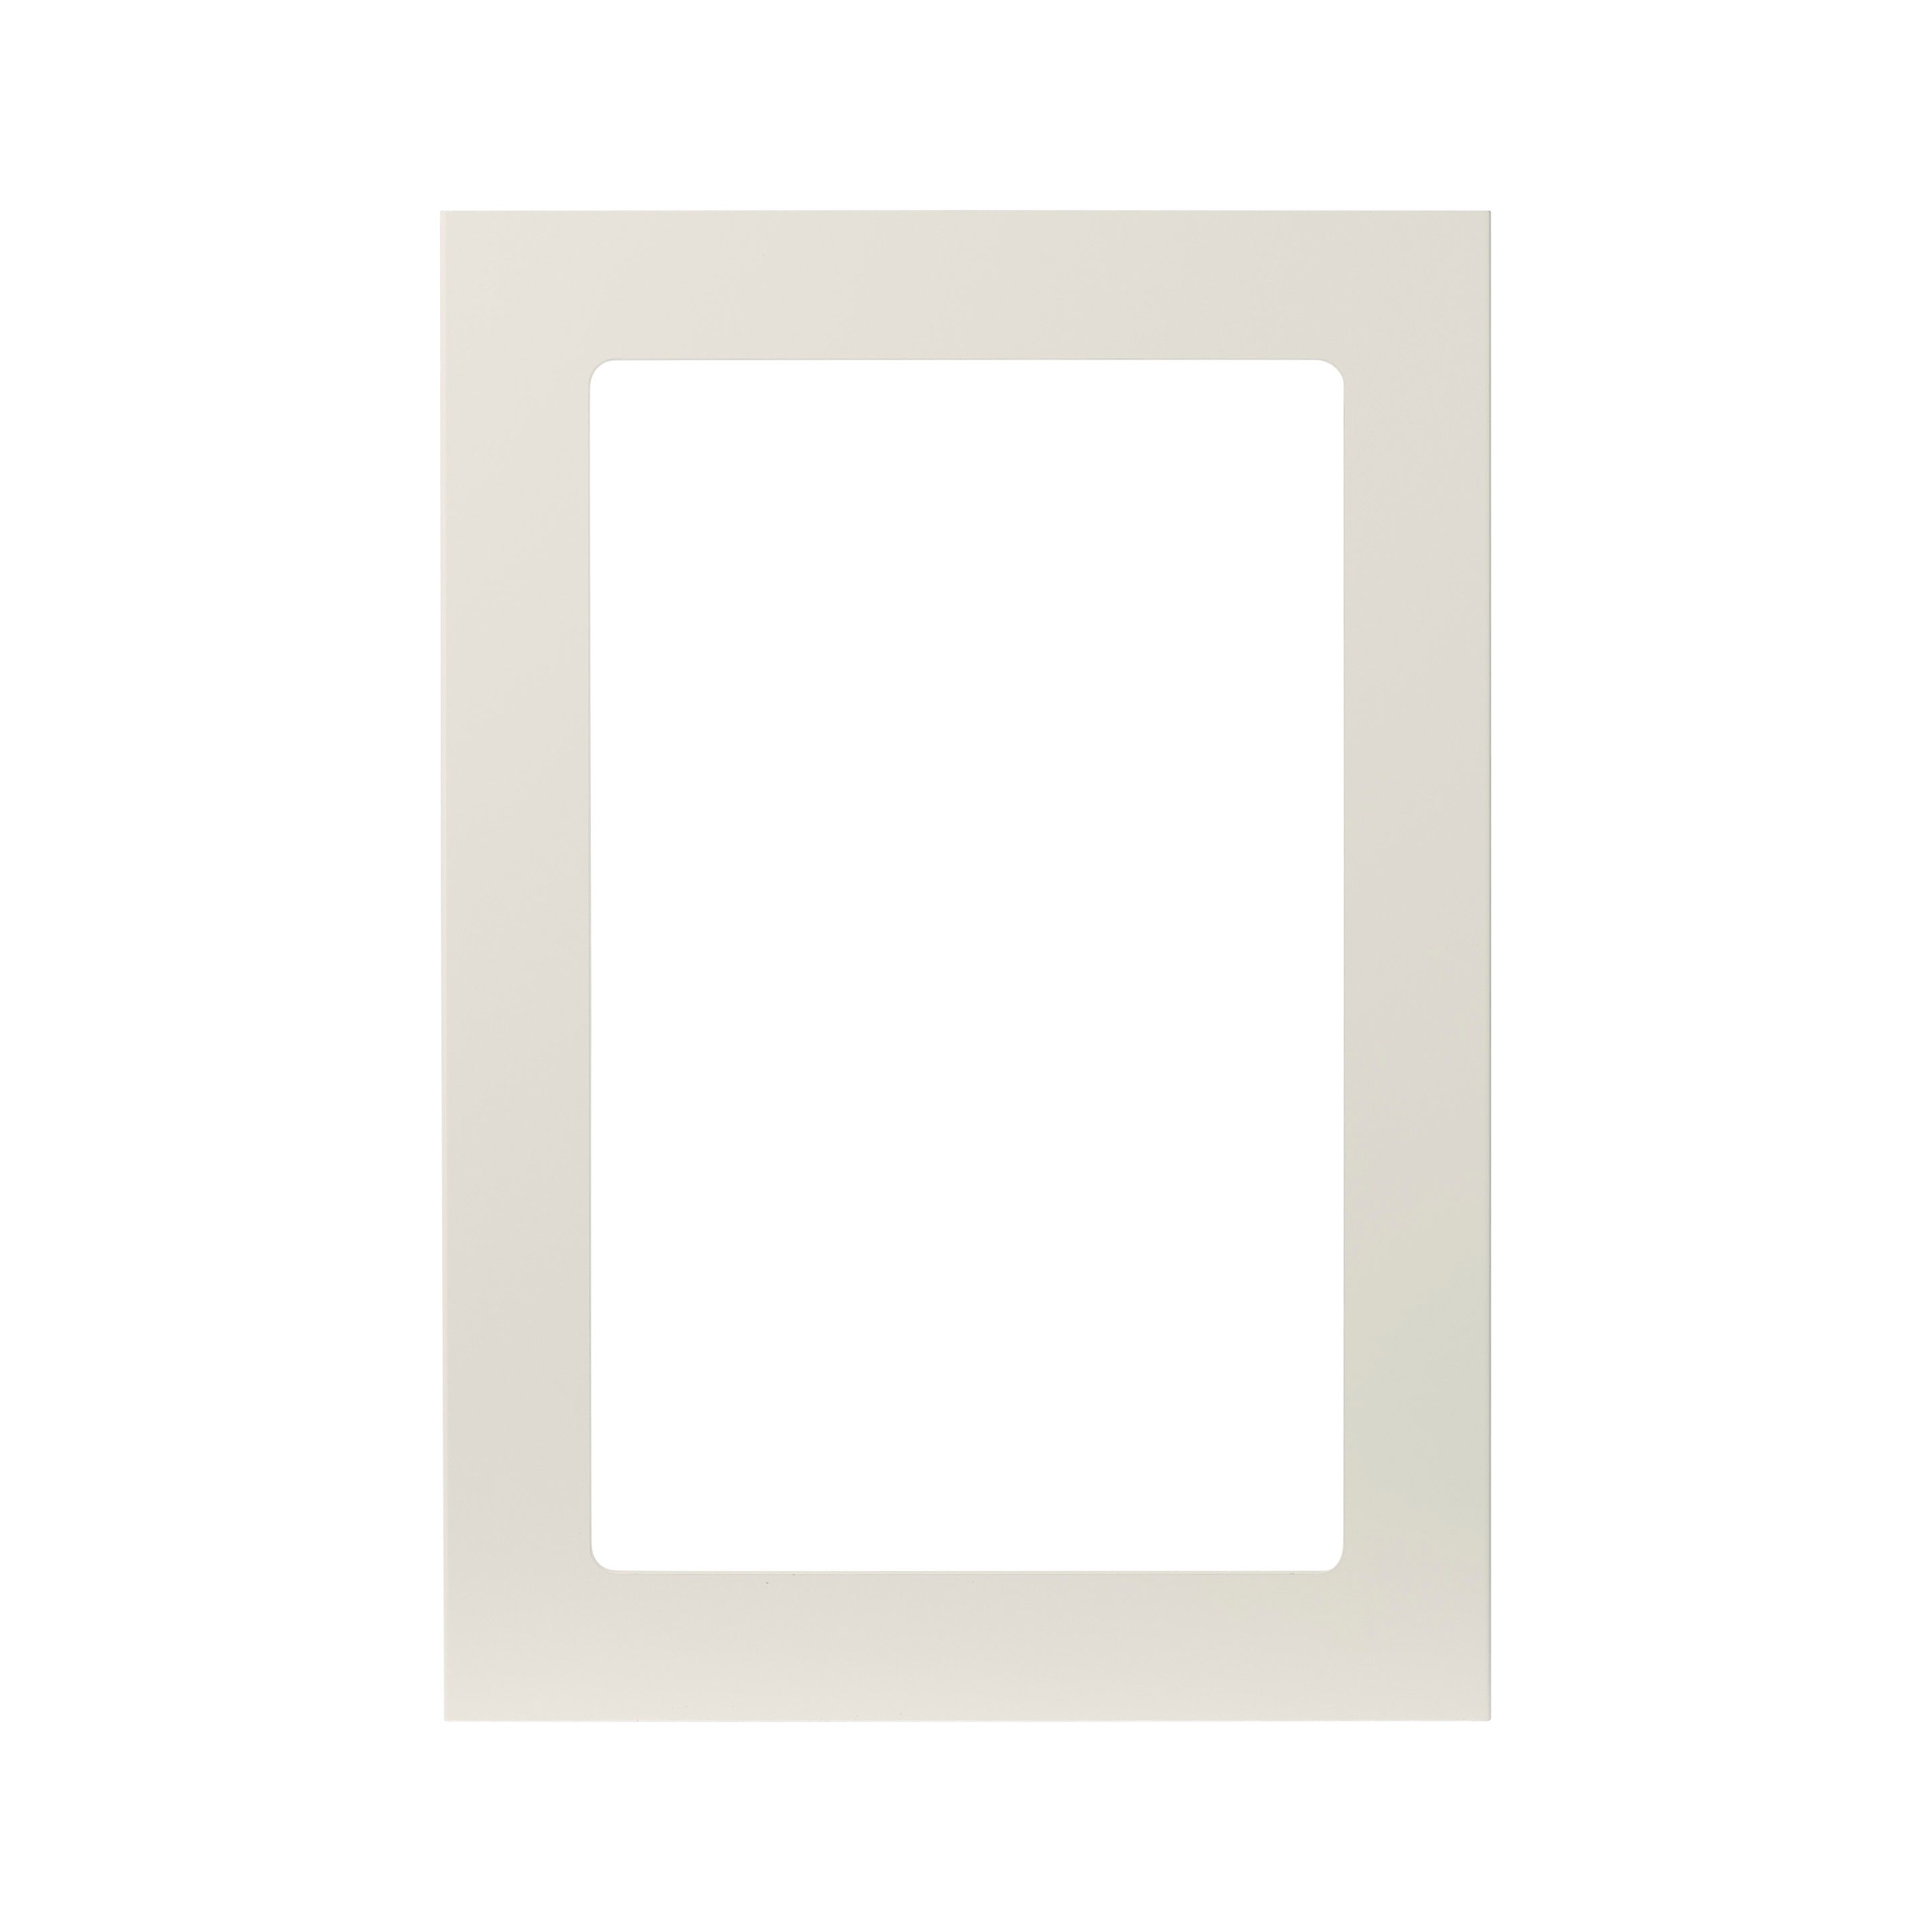 GoodHome Stevia Gloss cream slab Glazed Cabinet door (W)500mm (H)715mm (T)18mm